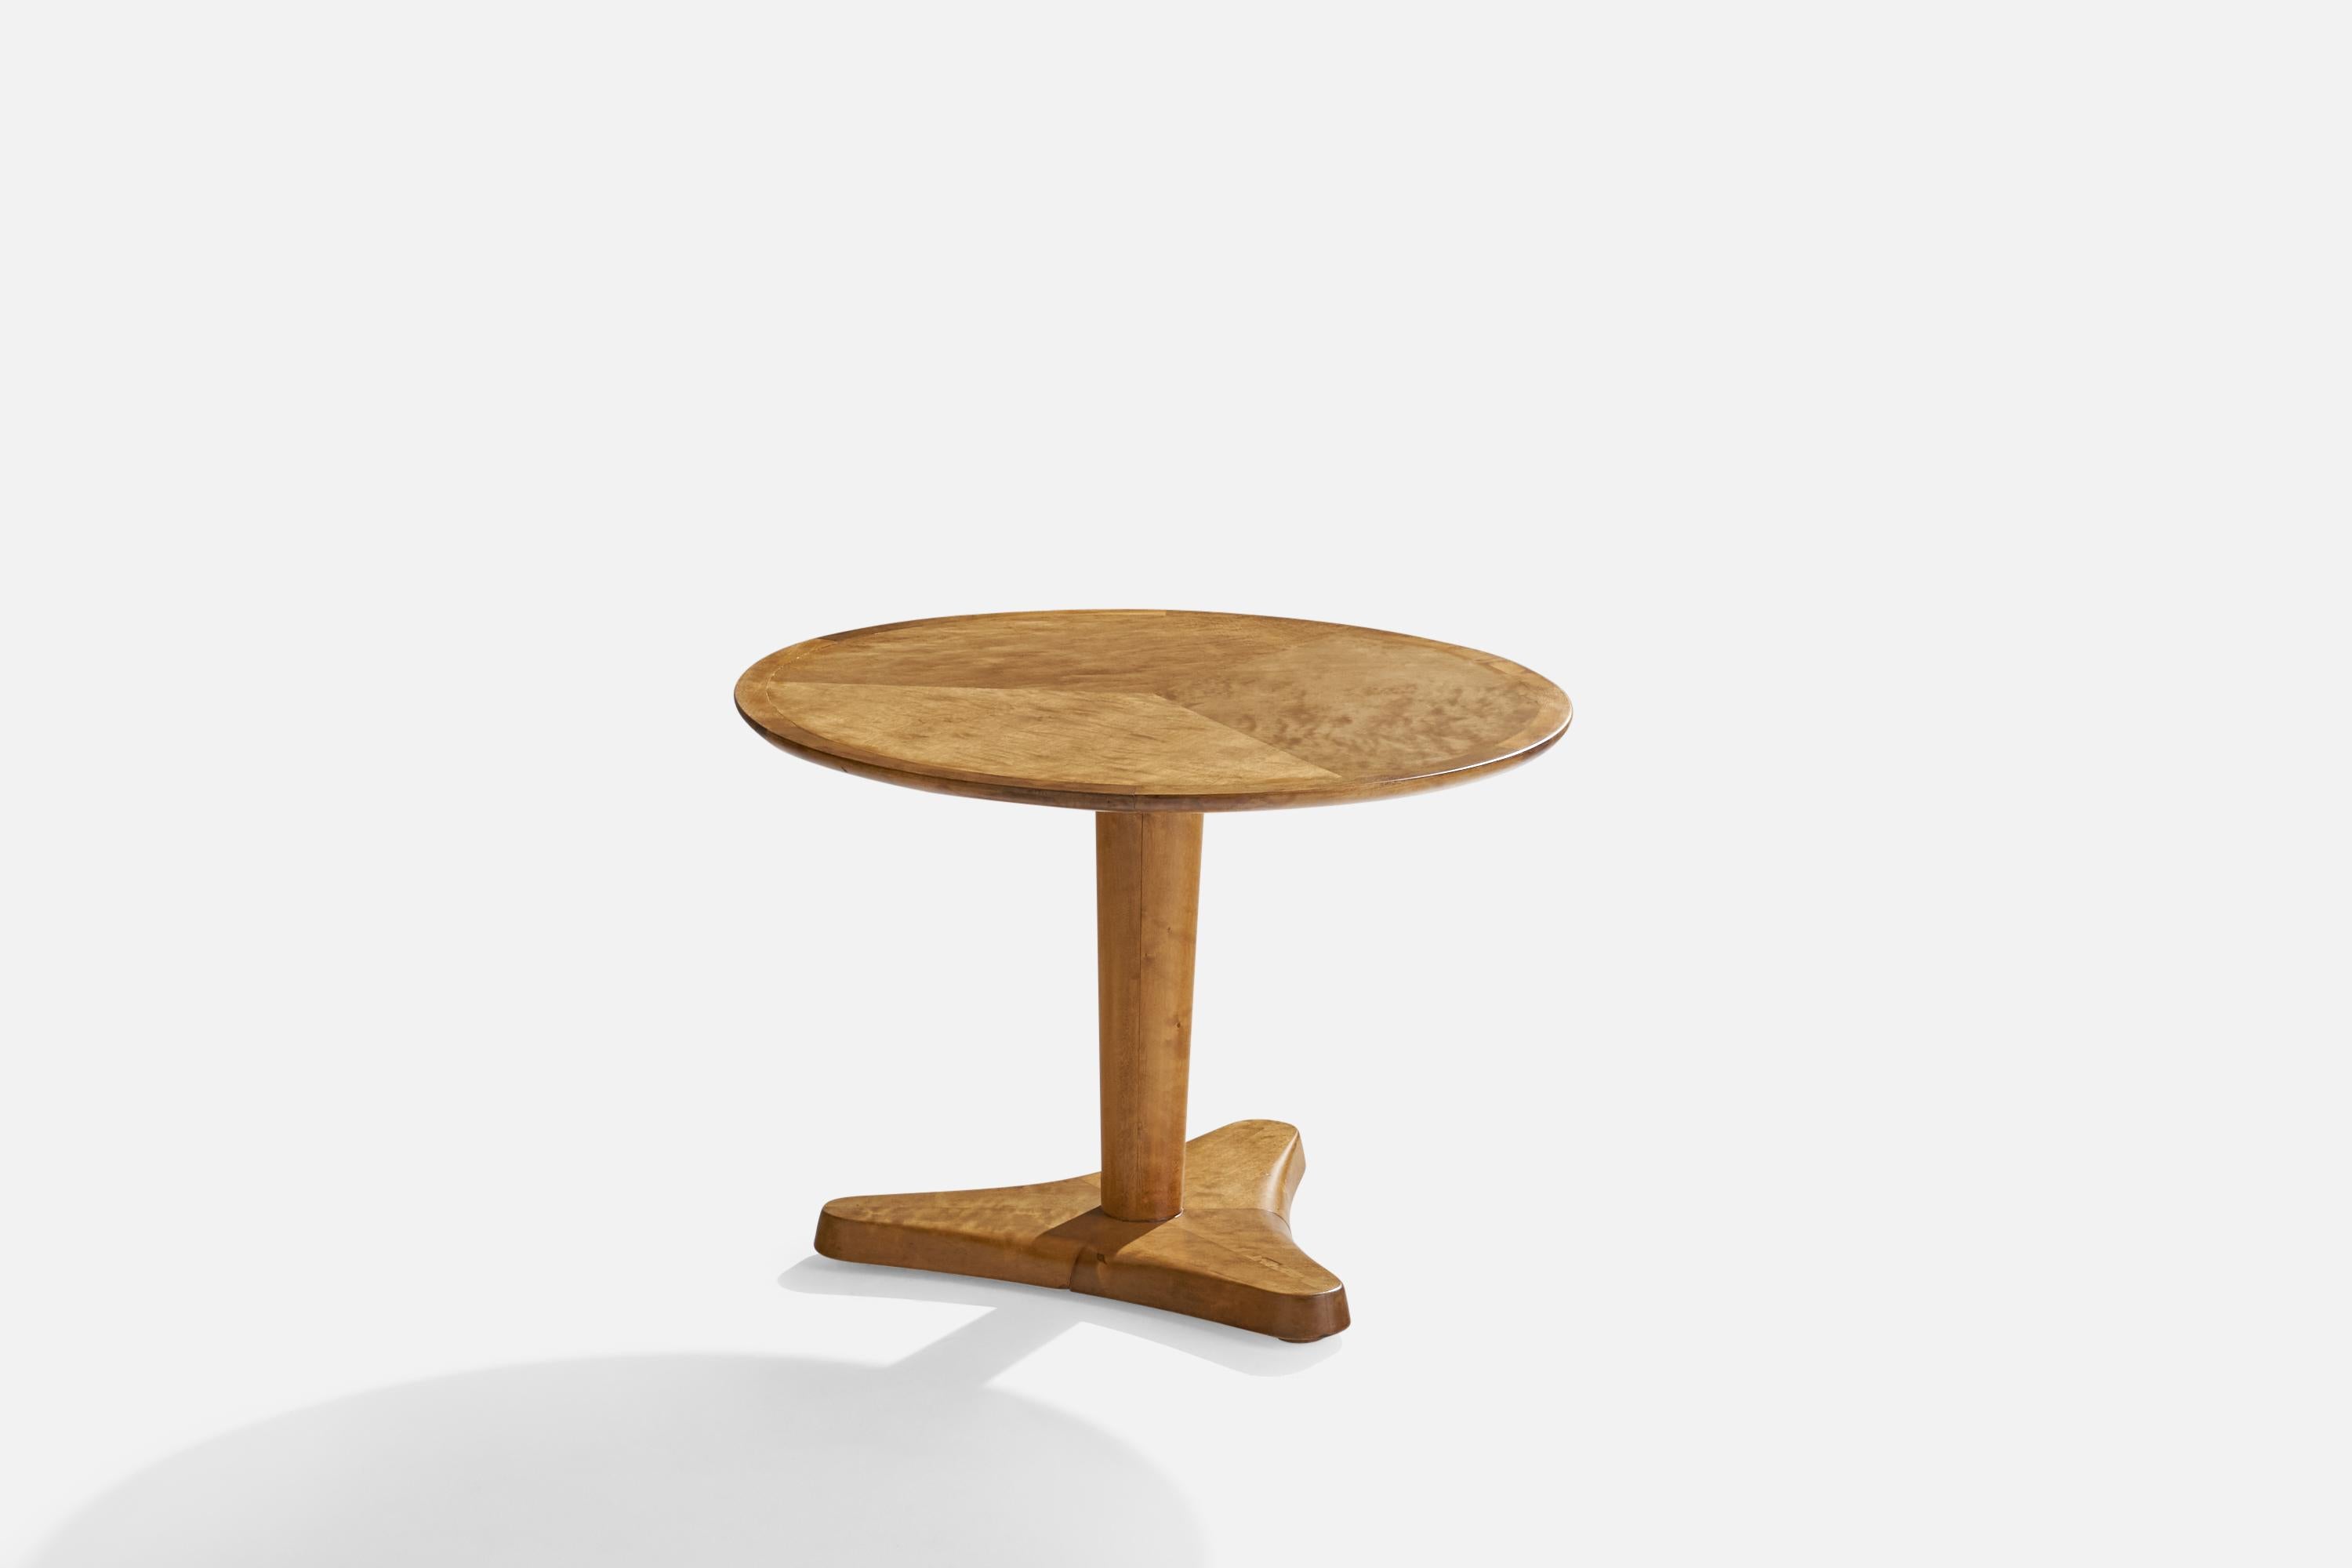 A birch side table designed by Margaret T. Nordman and produced by Oy Stockmann Ab, Keravan Puusepäntehdas, Finland, Finland, 1930s.